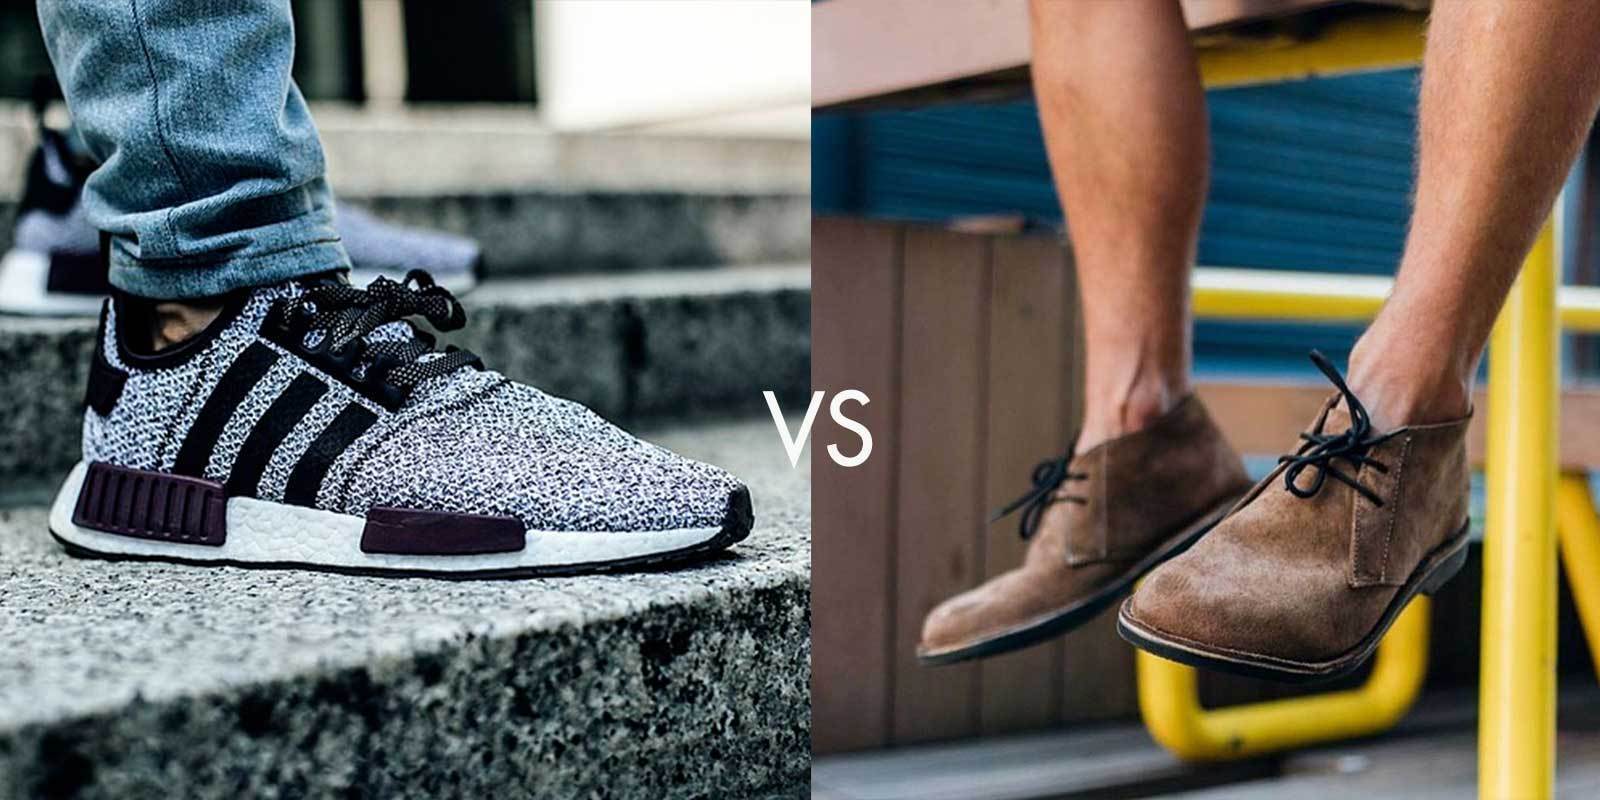 The Chukka boot VS the Sneaker 